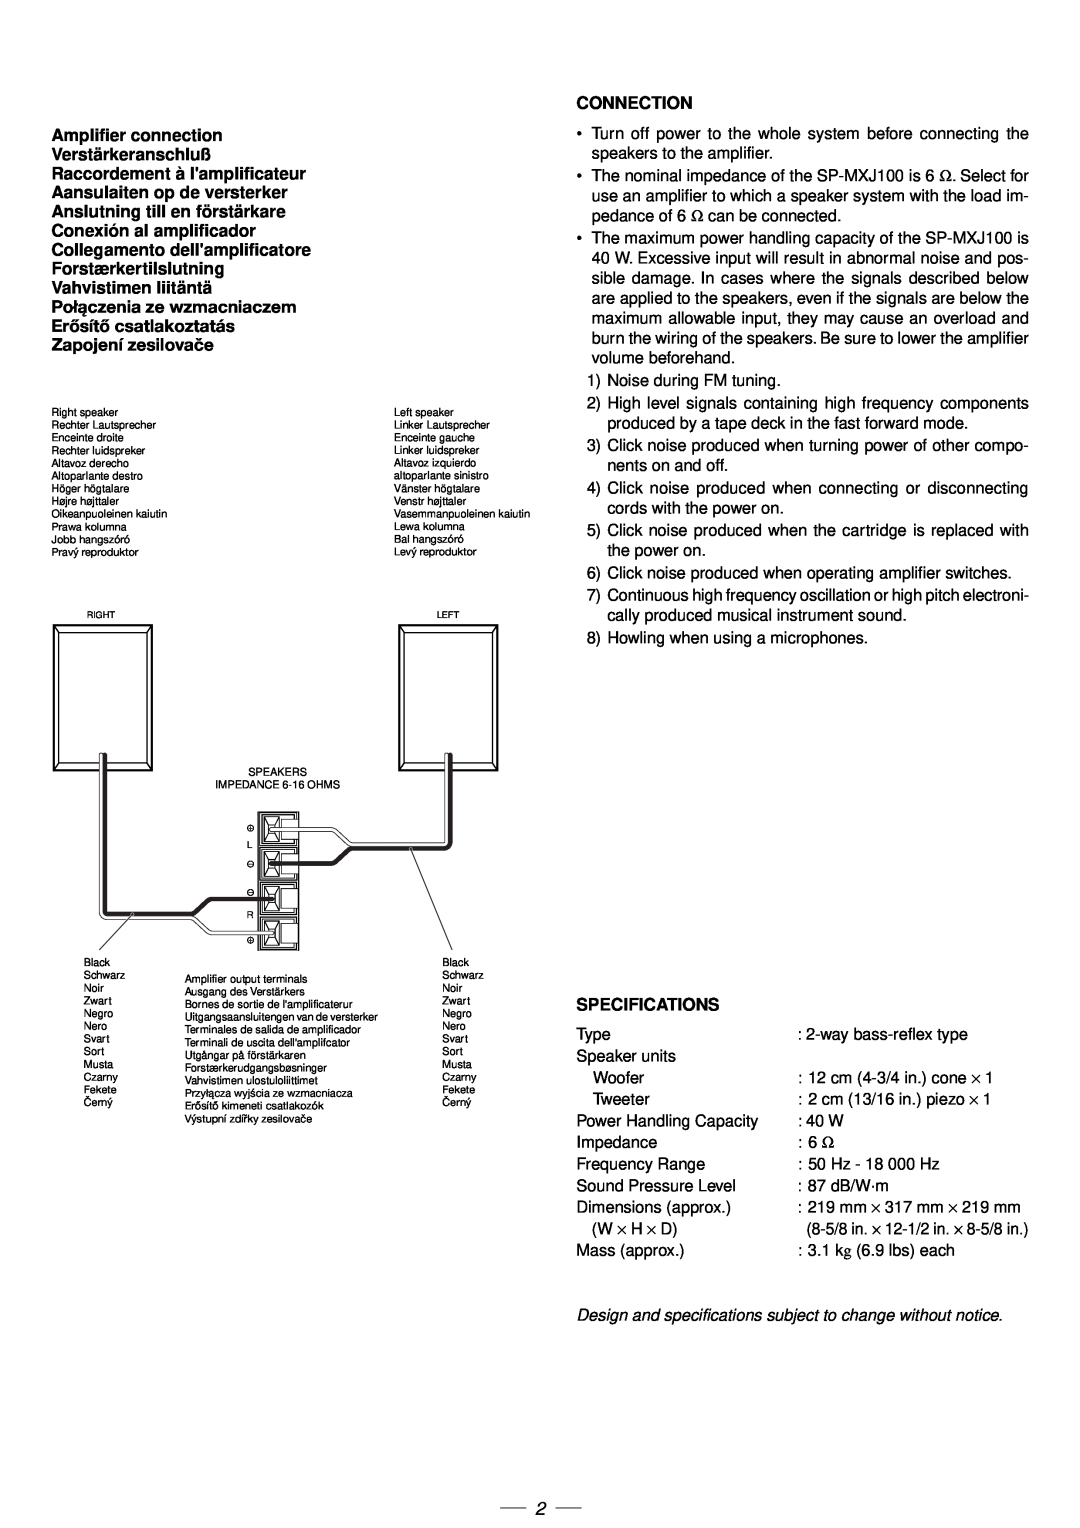 JVC CA-MXJ100 manual Amplifier connection Verstärkeranschluß, Raccordement à lamplificateur, Aansulaiten op de versterker 